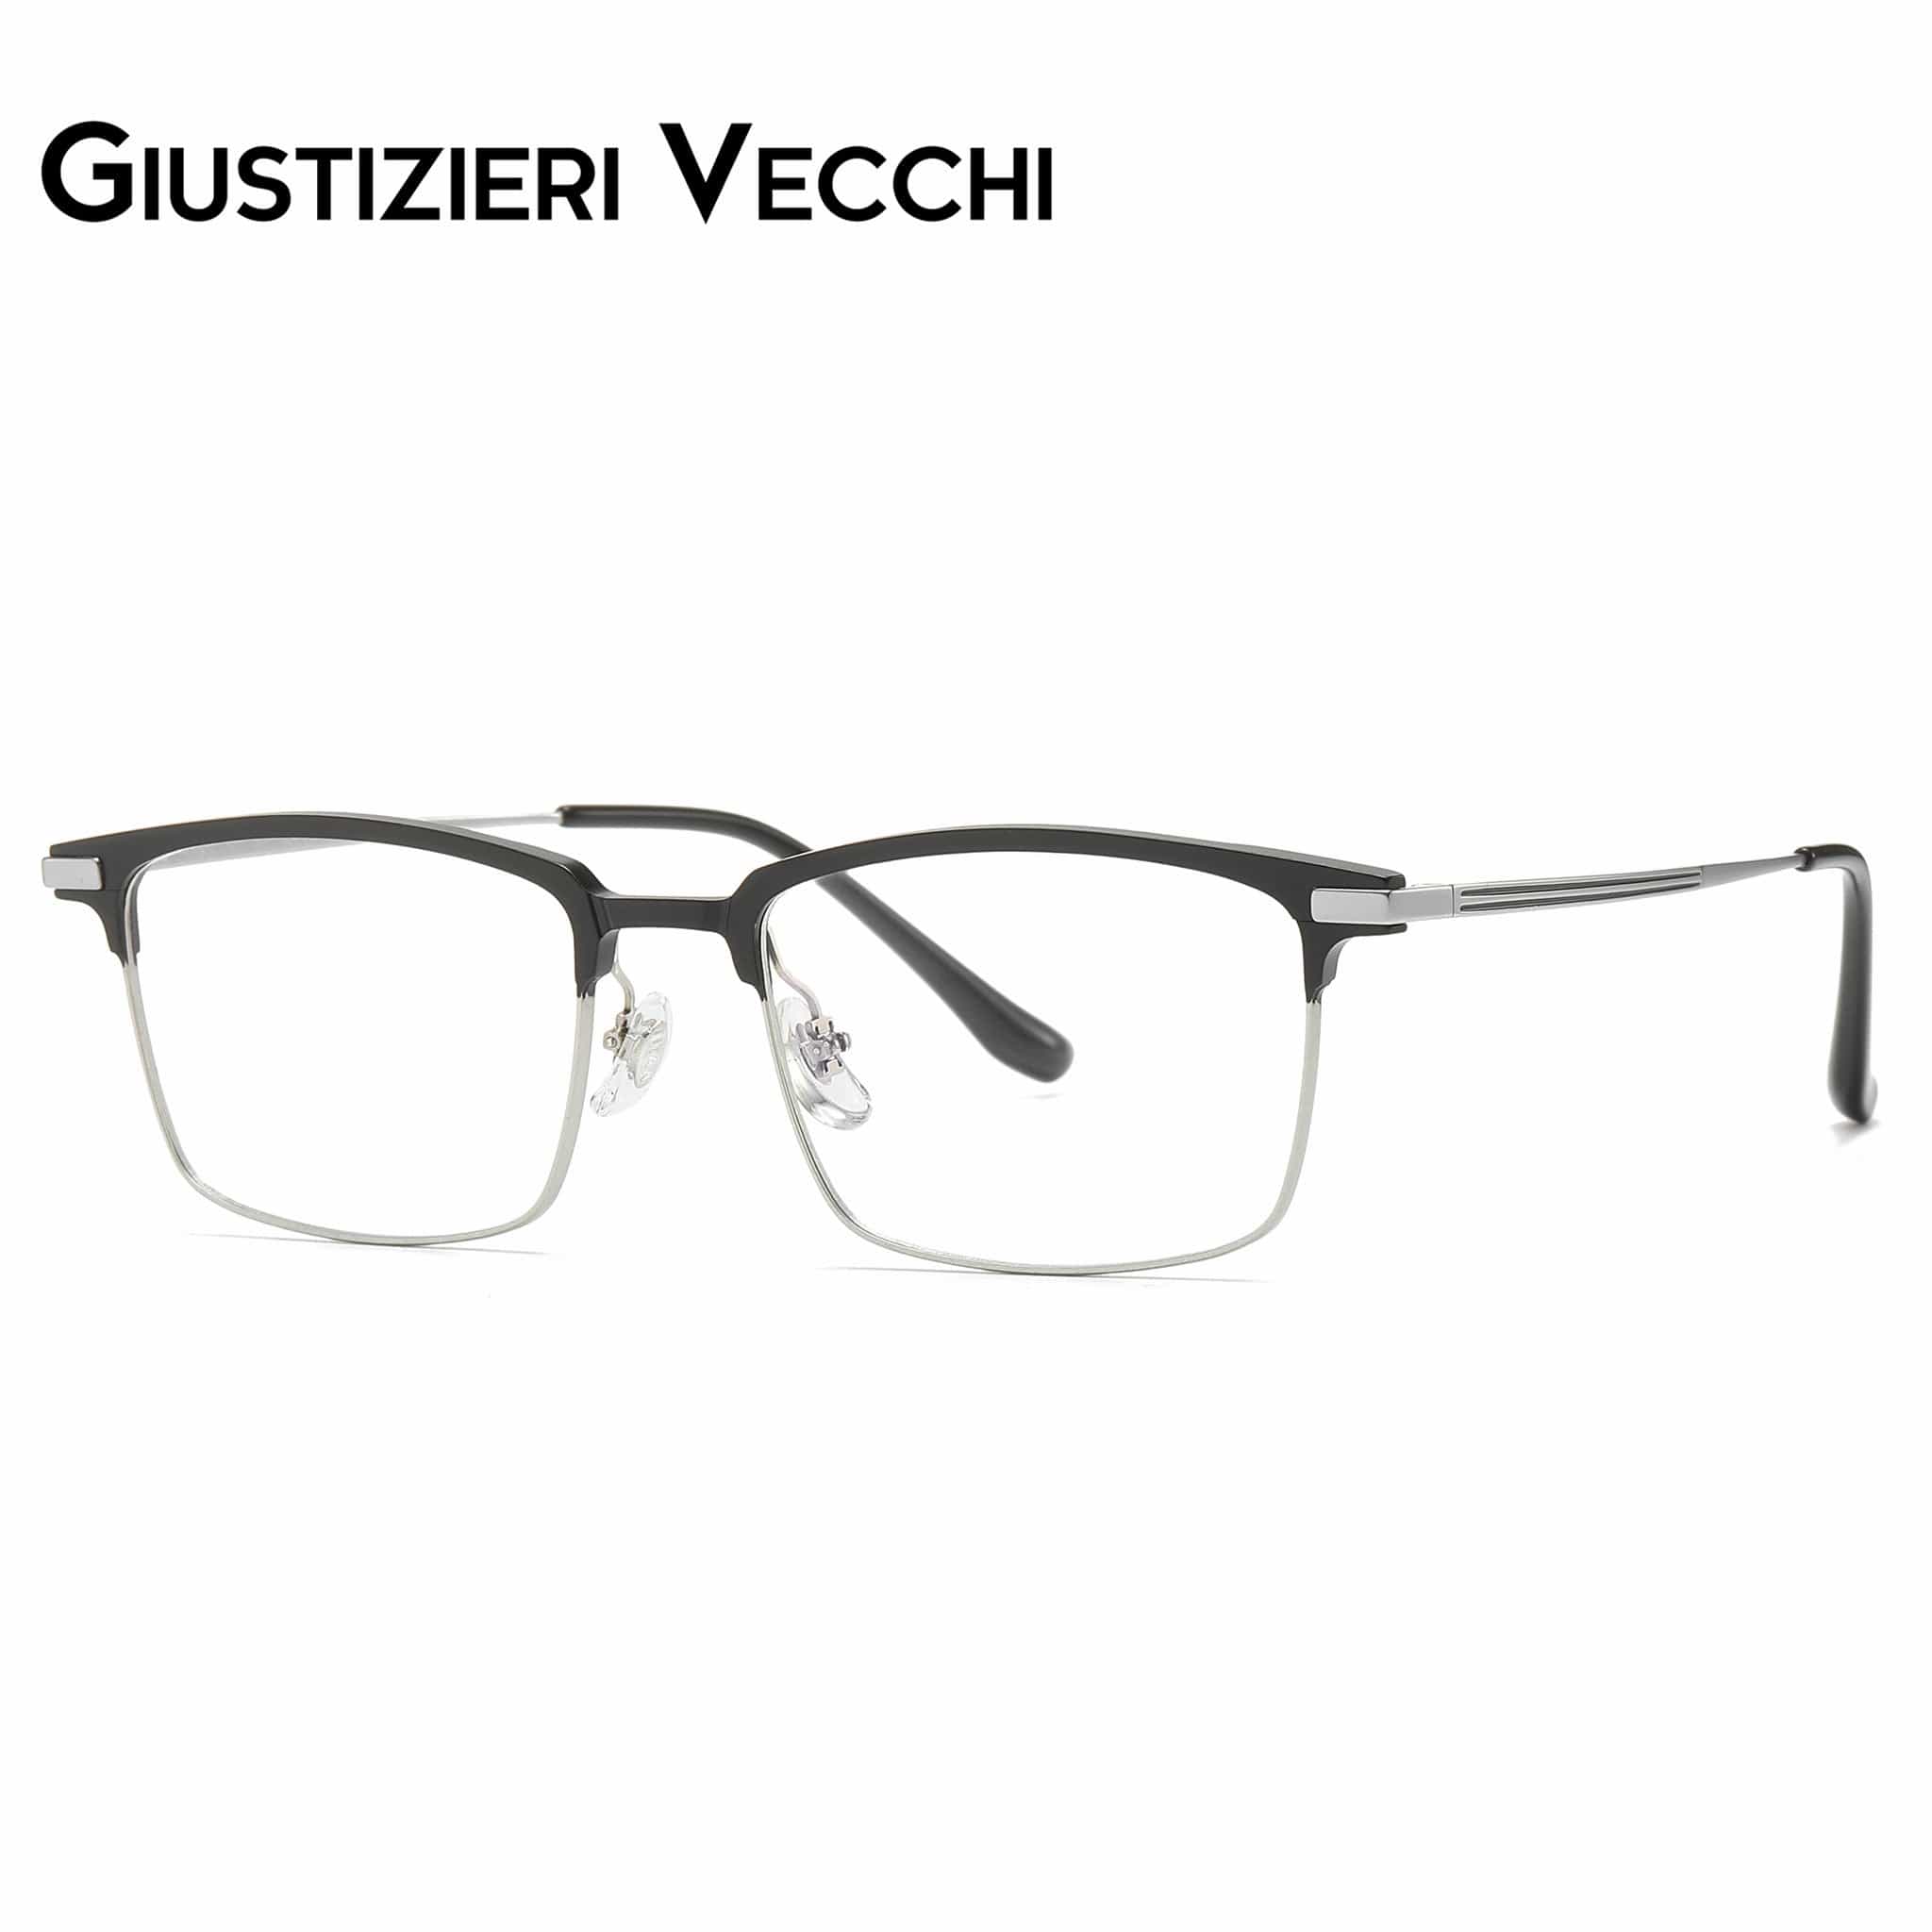 GIUSTIZIERI VECCHI Eyeglasses Medium / Black with Silver AuroraBloom Duo